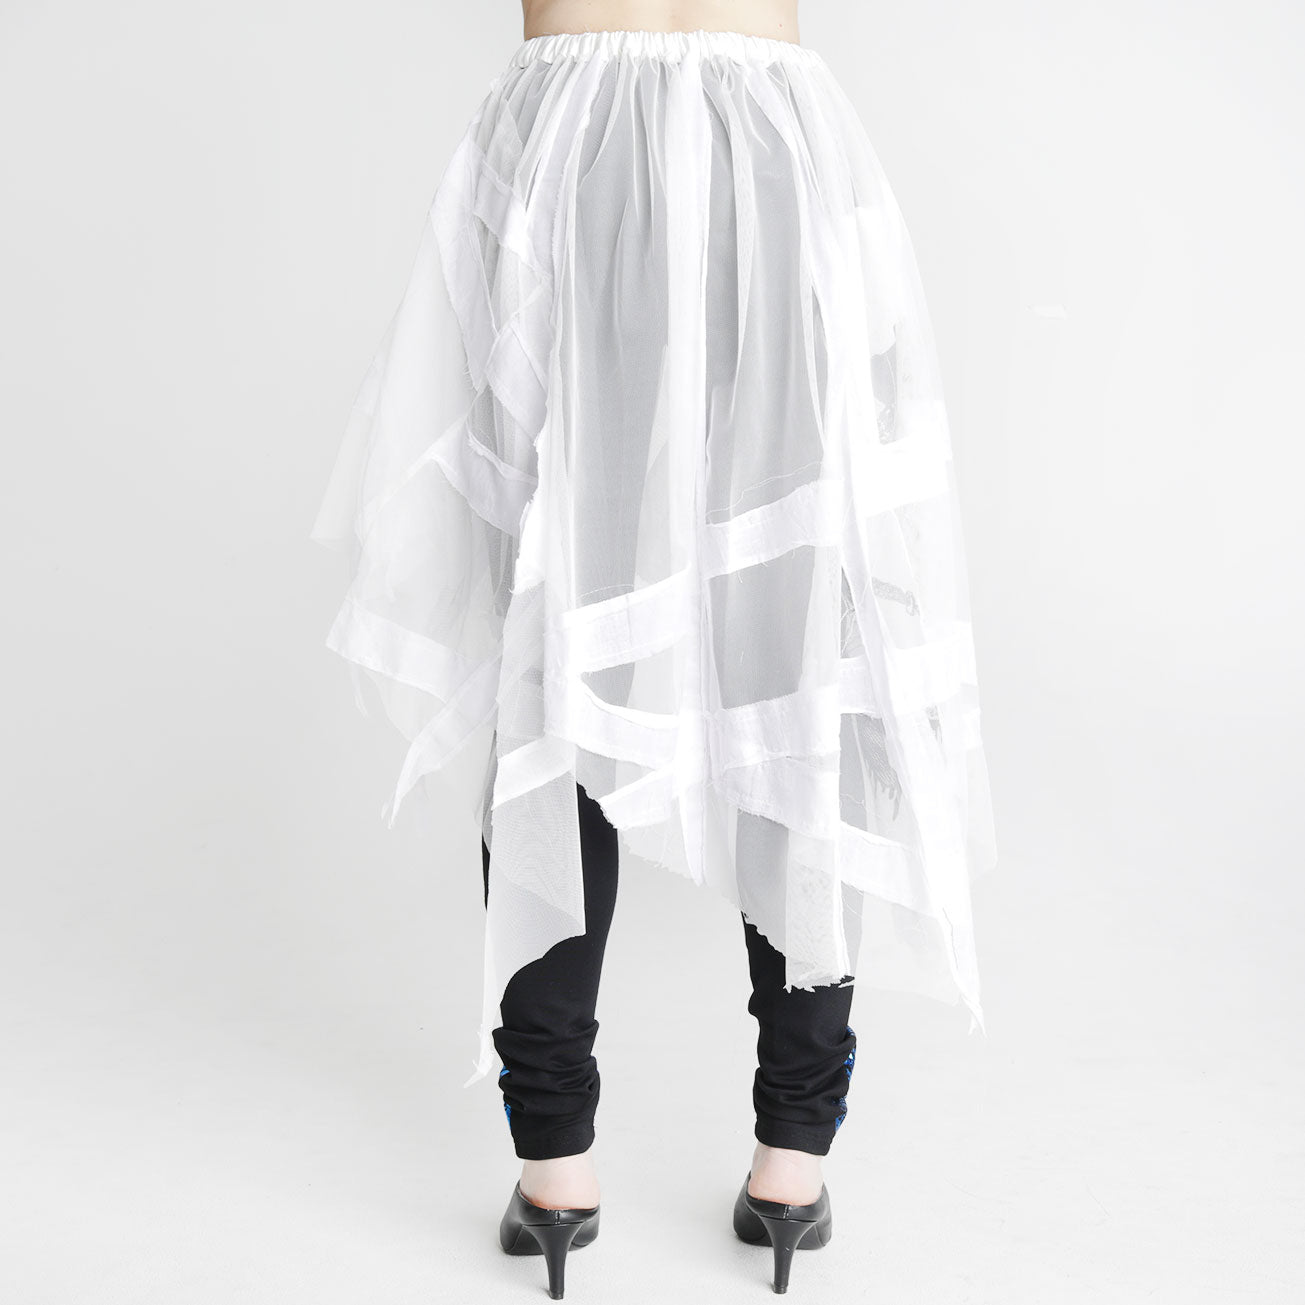 Mesh gauze see-through skirt